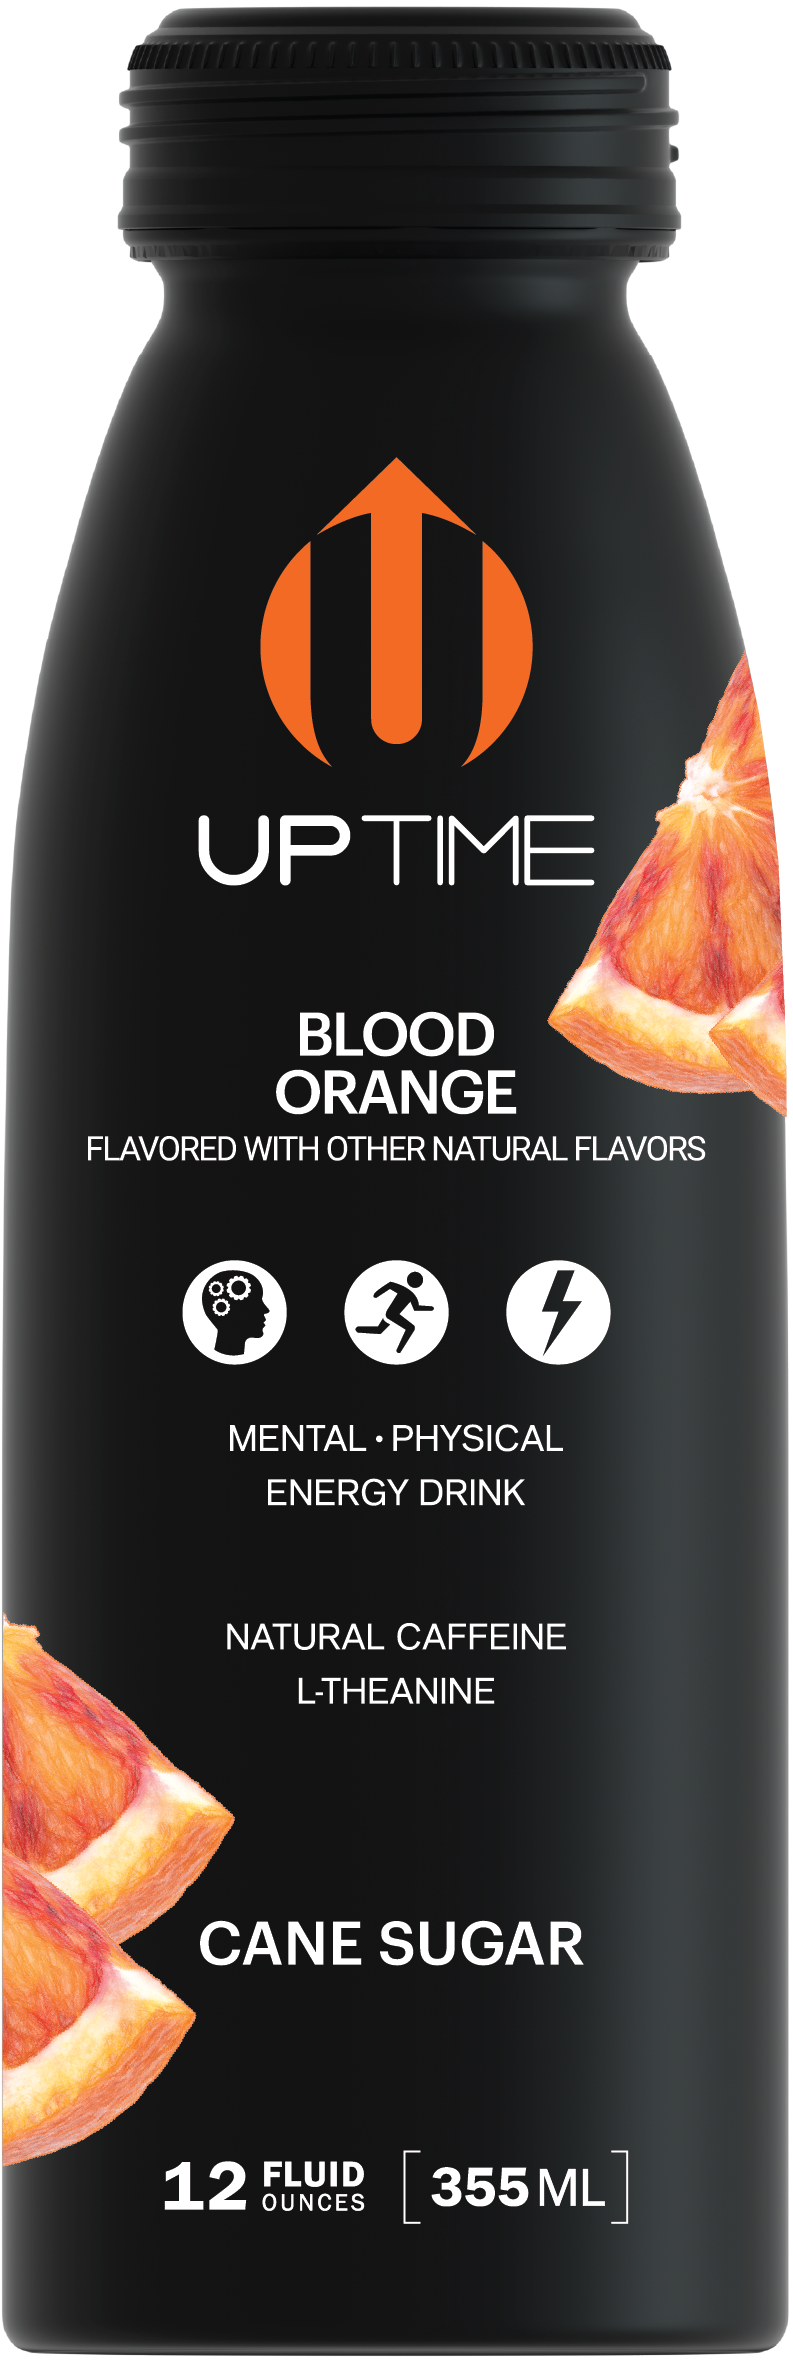 UPTIME Premium Energy Drink, Blood Orange, 12oz Bottles - Multi Pack